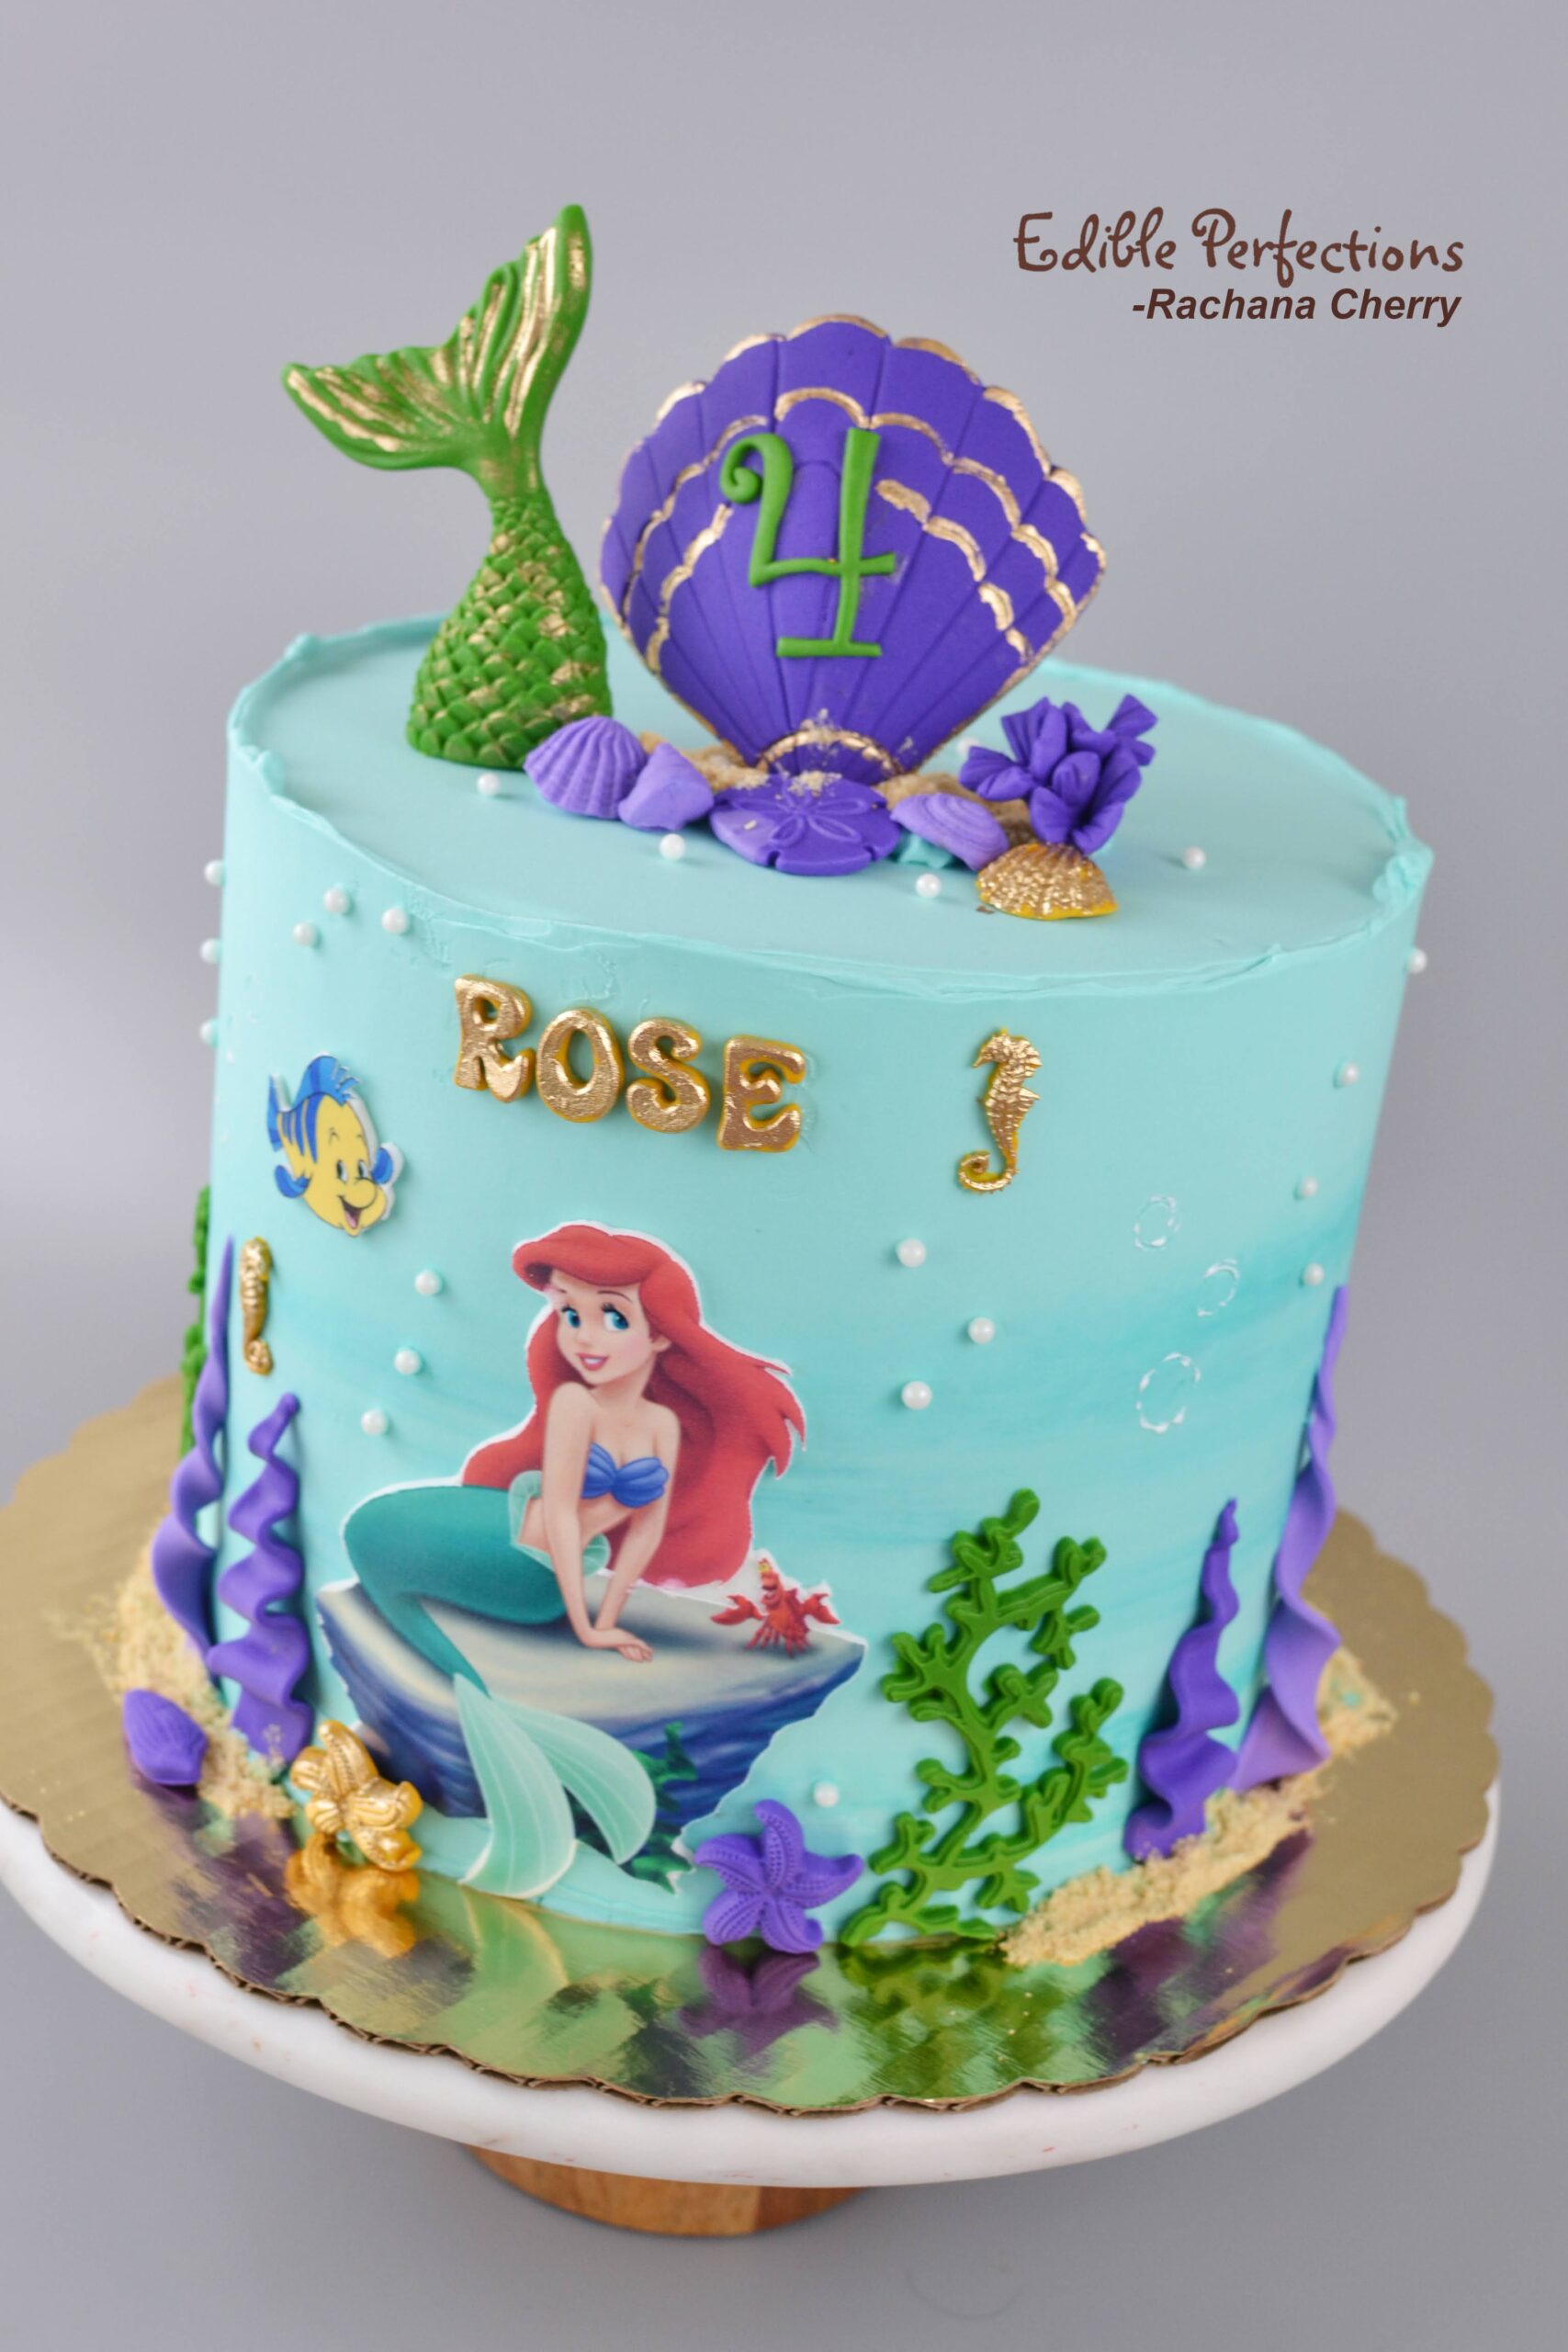 7th Birthday Acrylic Cake Topper - 7 Years Old - Seventh | eBay